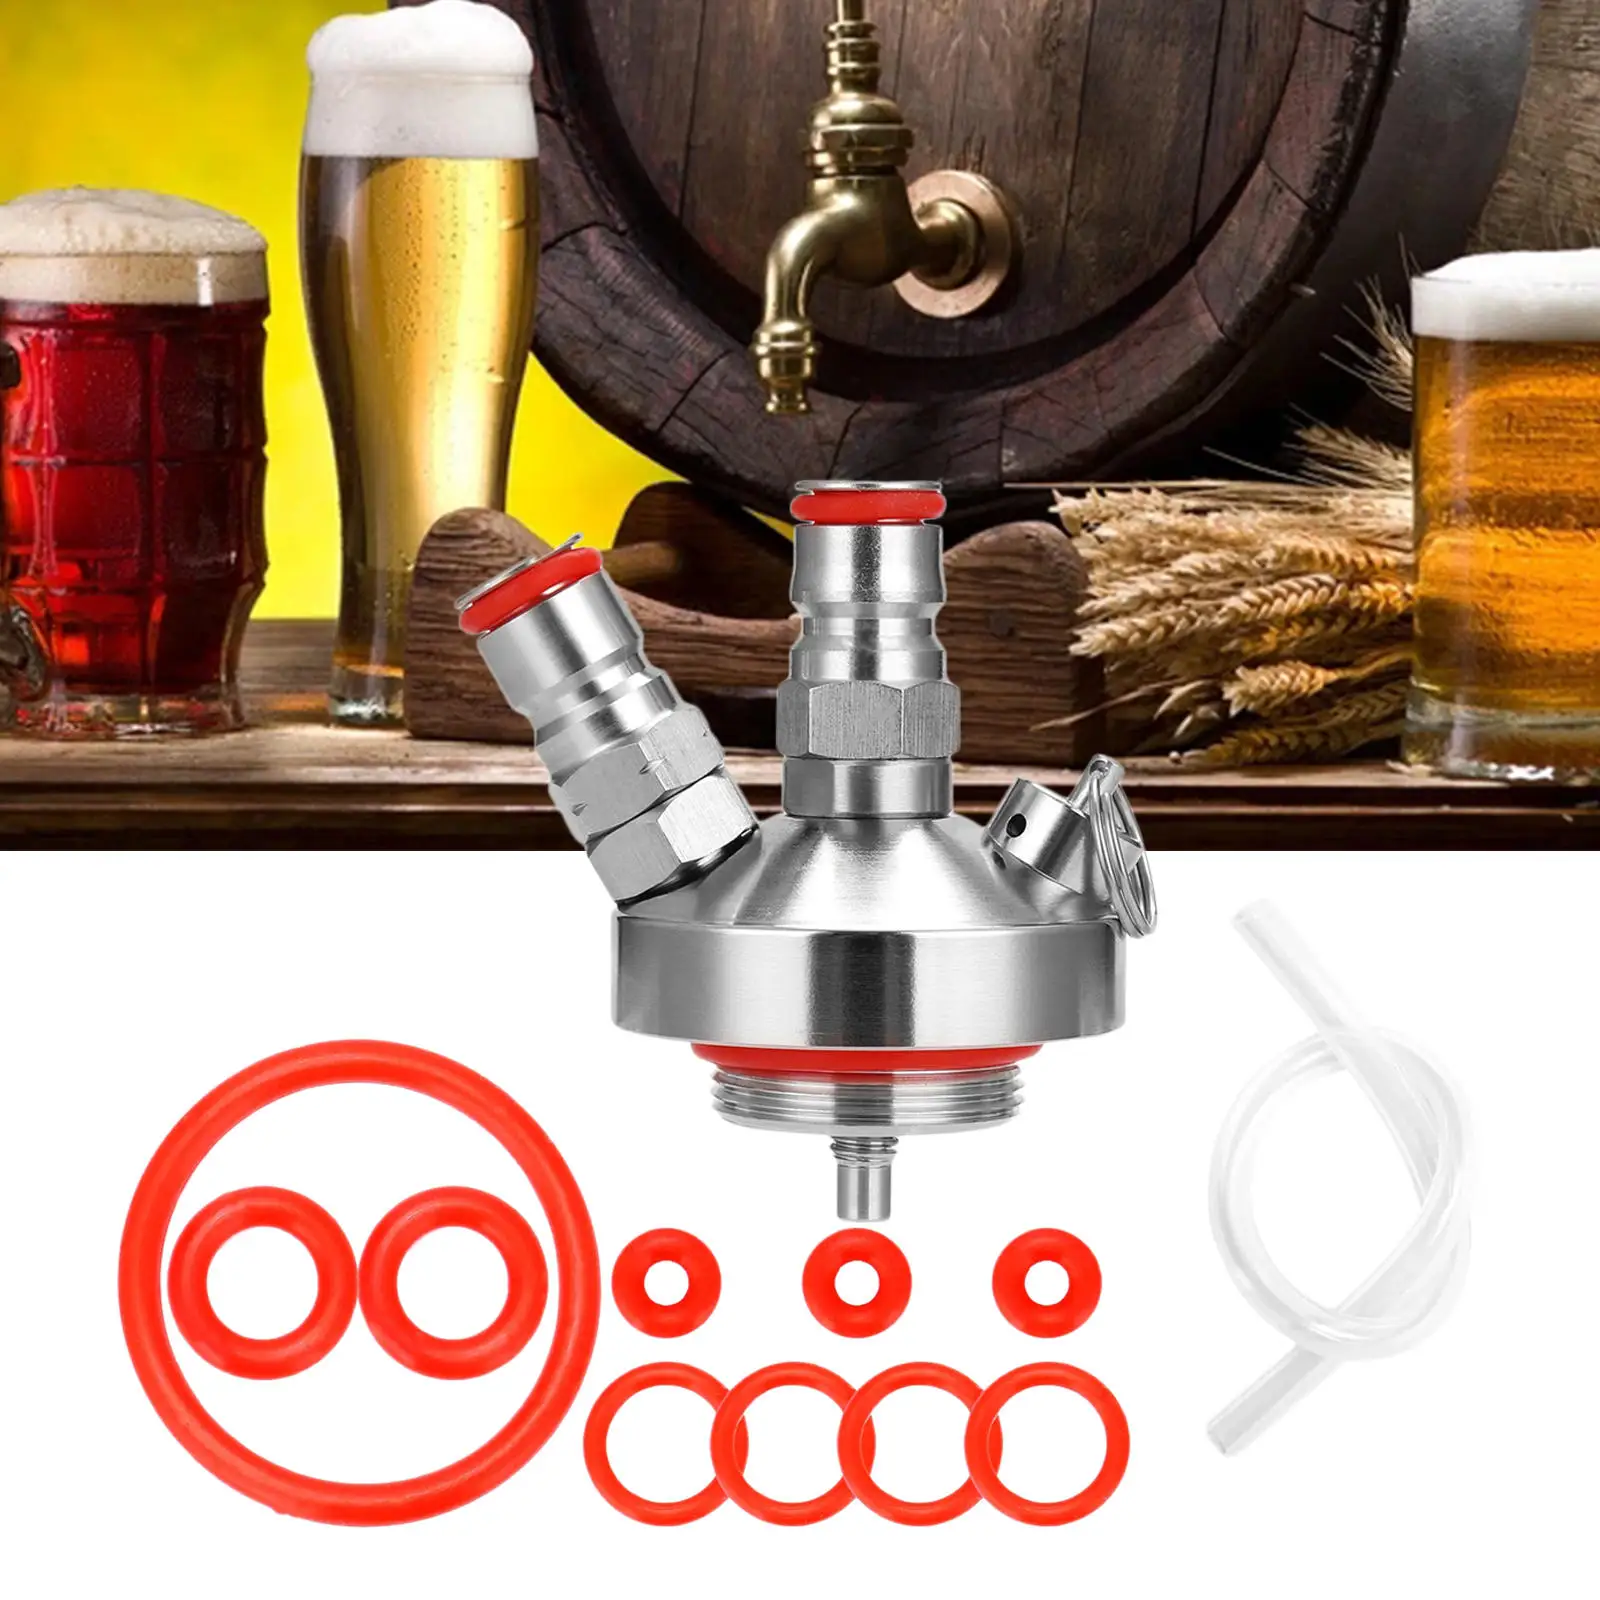 Mini Keg Dispenser with Beer Hose Beers Tool Wine Tap Dispenser Mini Keg Spear for Home Brewing